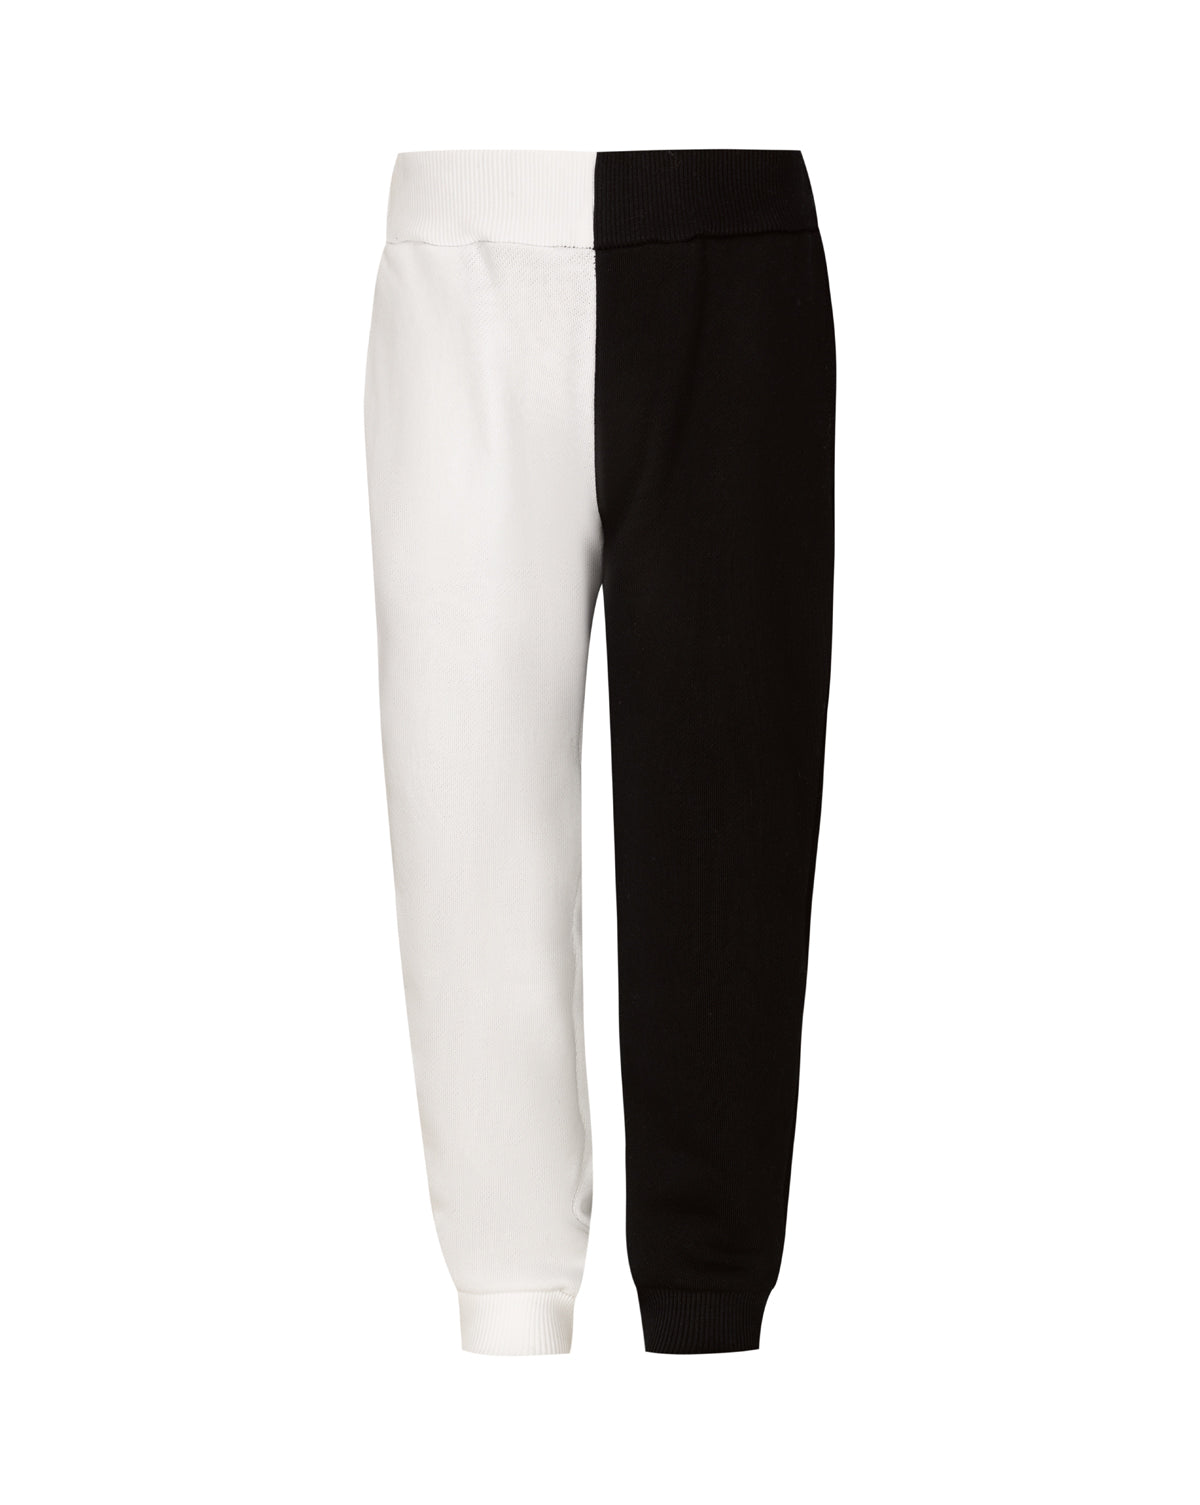 Organic Fleece Duo Sweatpants - Black and White